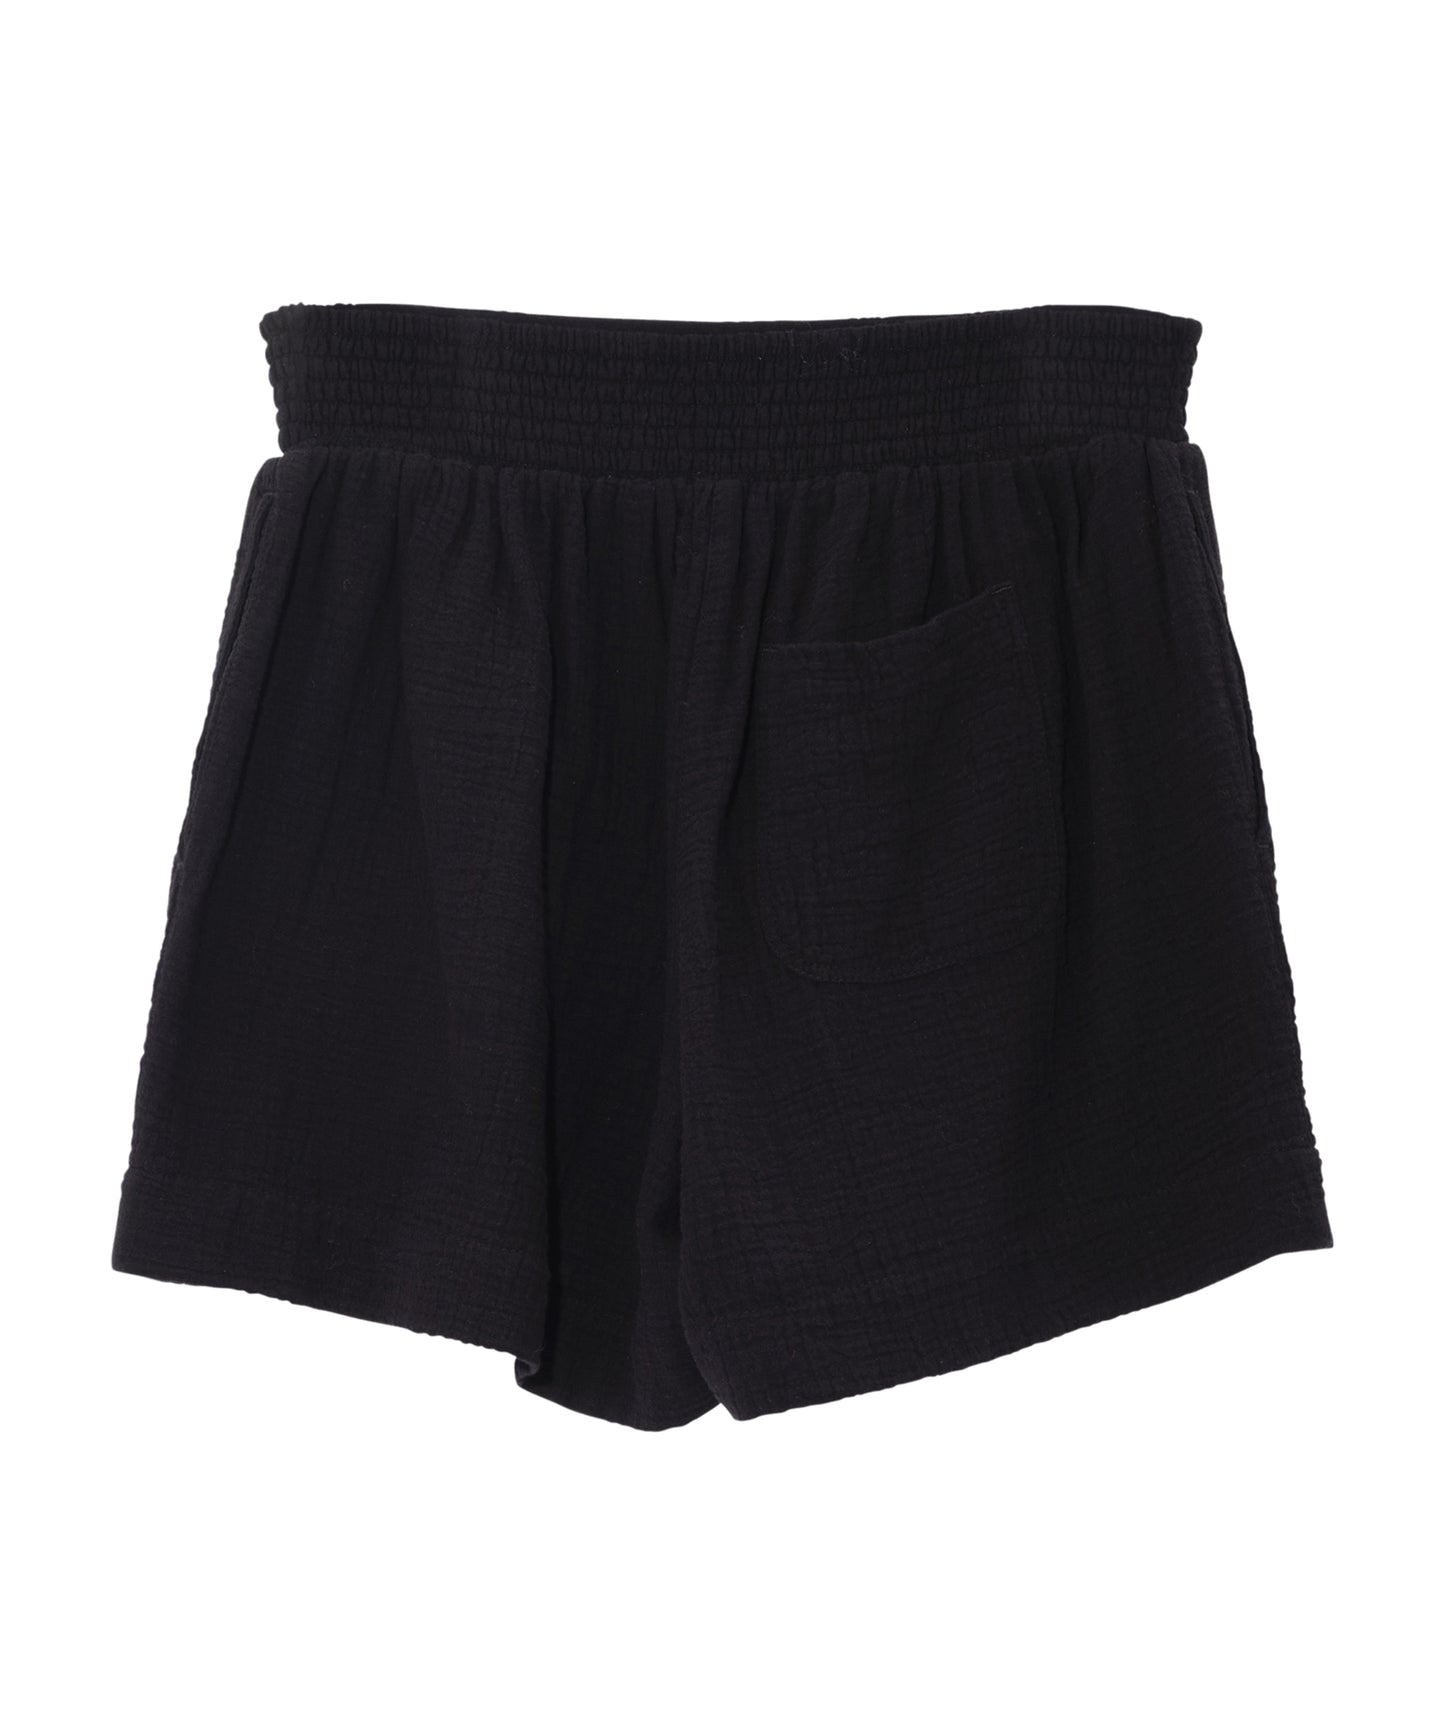 Supersoft Gauze Smocked Shorts in color black - back of shorts